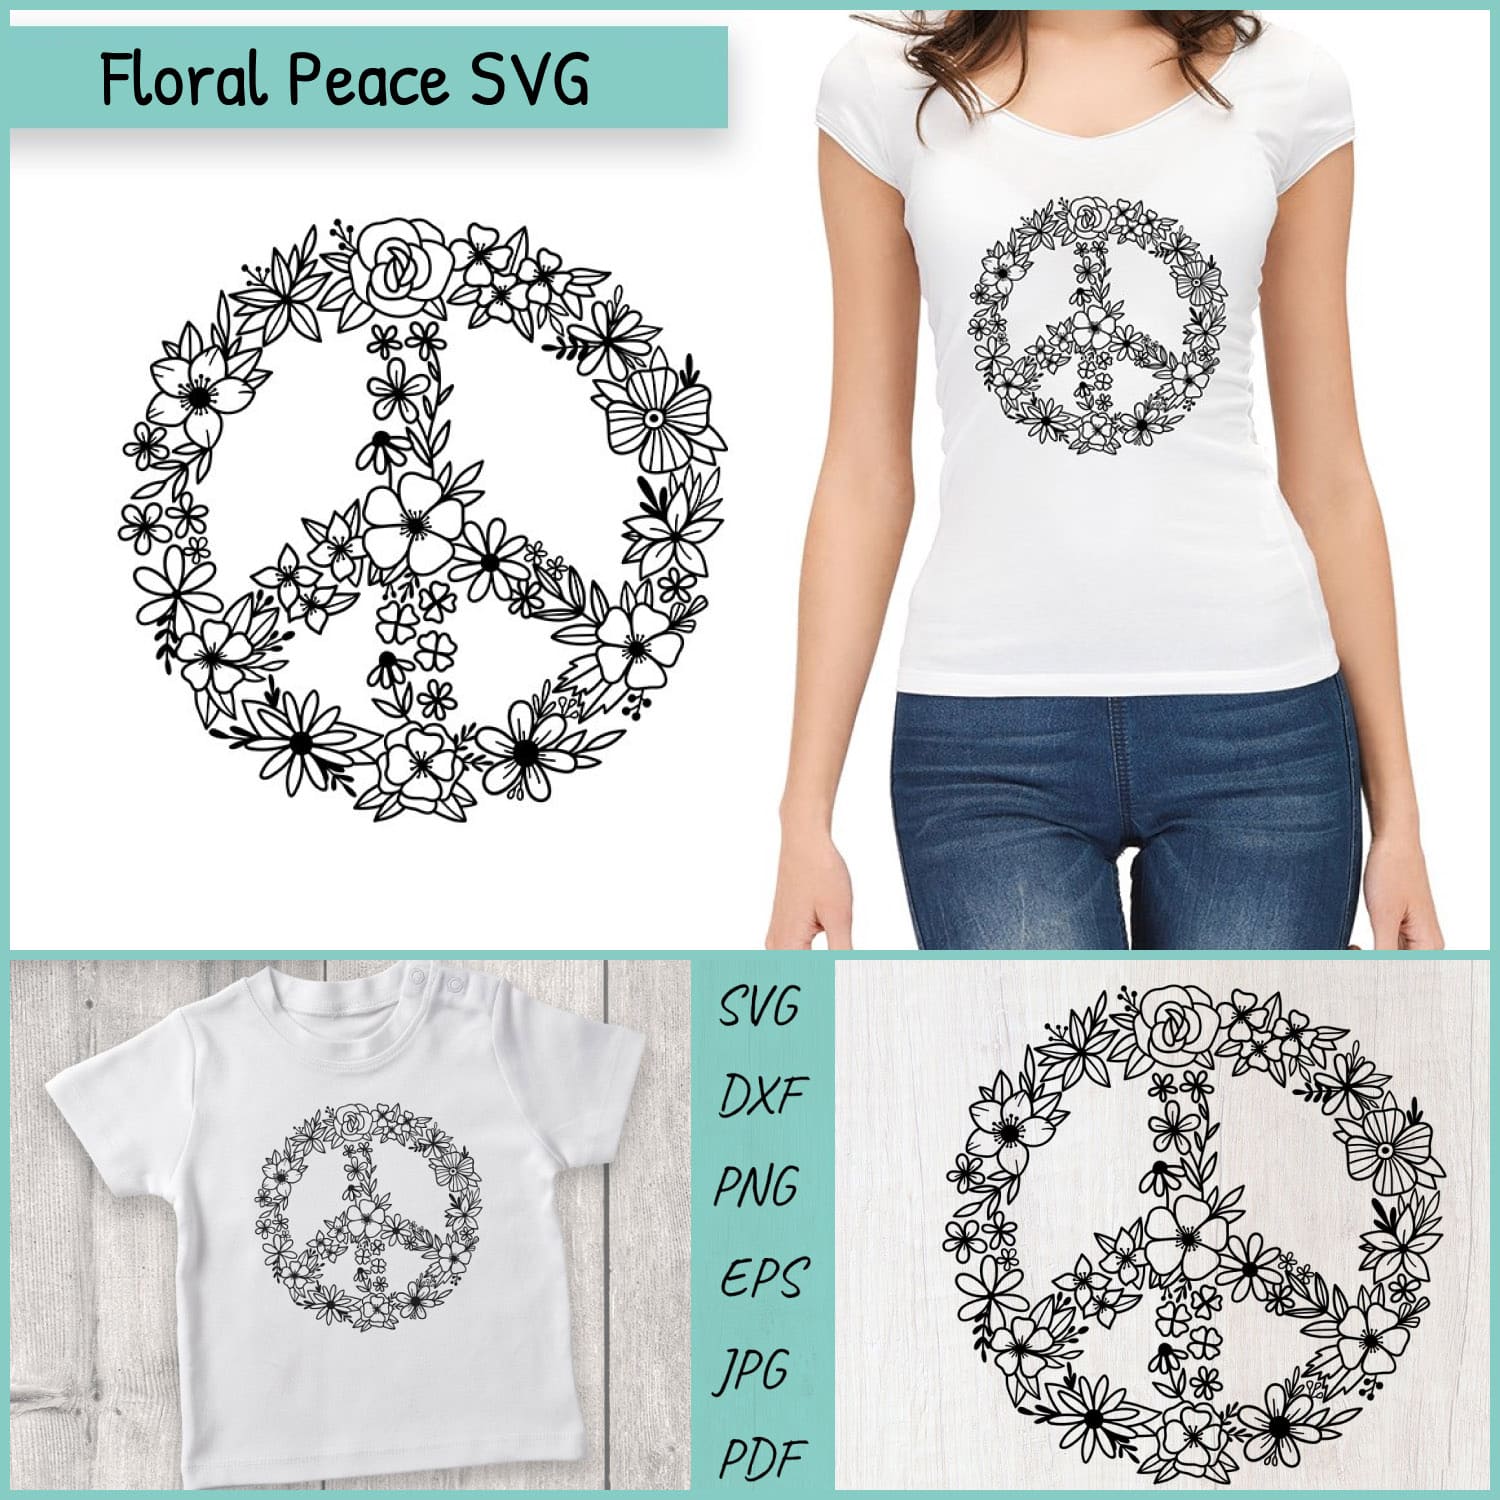 Flower SVG| Floral Peace SVG | Peace sign | Hippie SVG main cover.